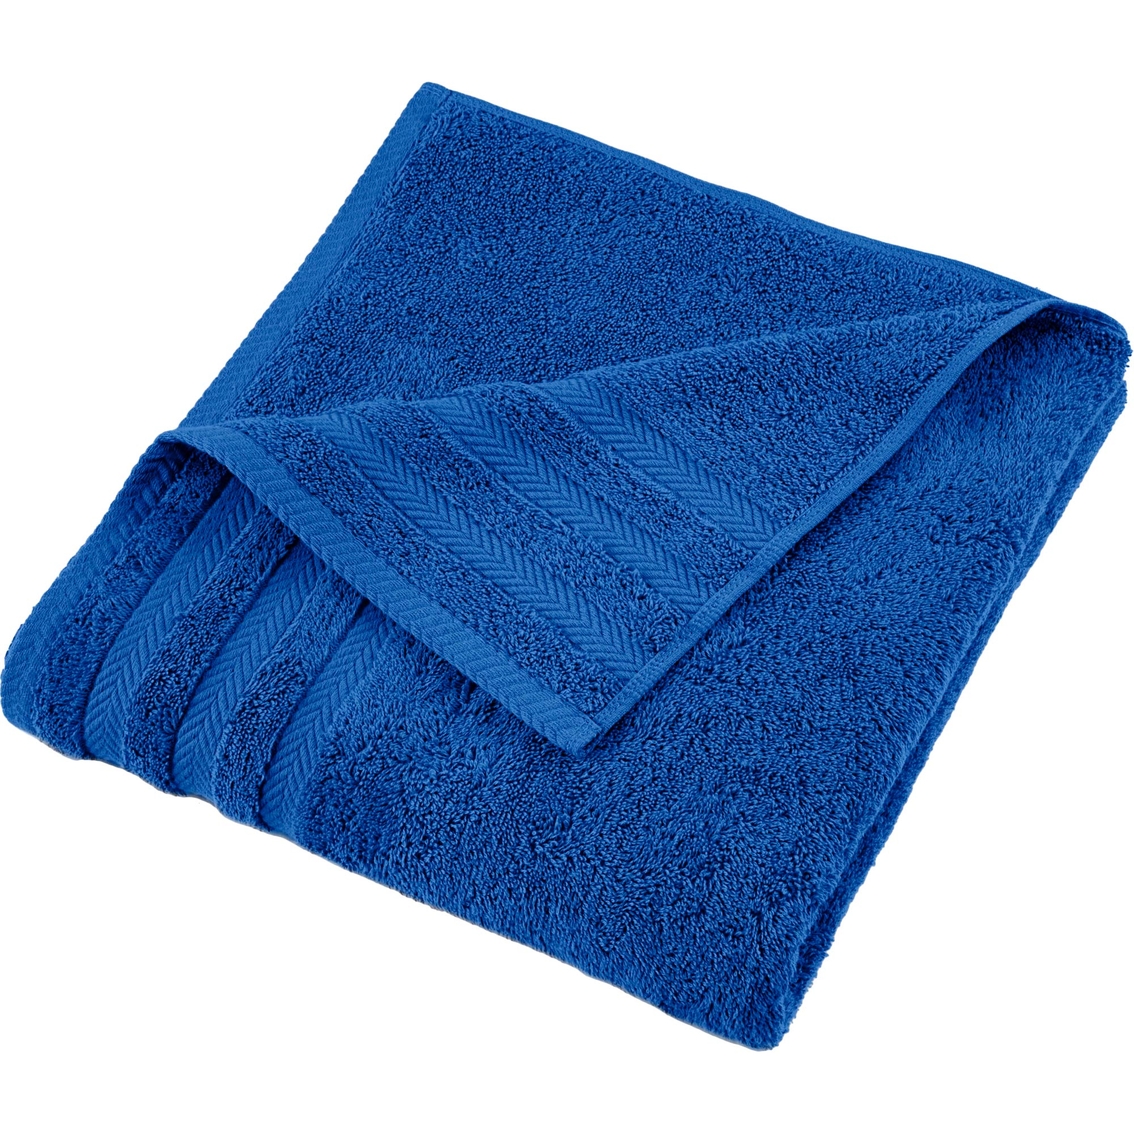 Martex Egyptian Performance Body Sheet Towel, Bath Towels, Household